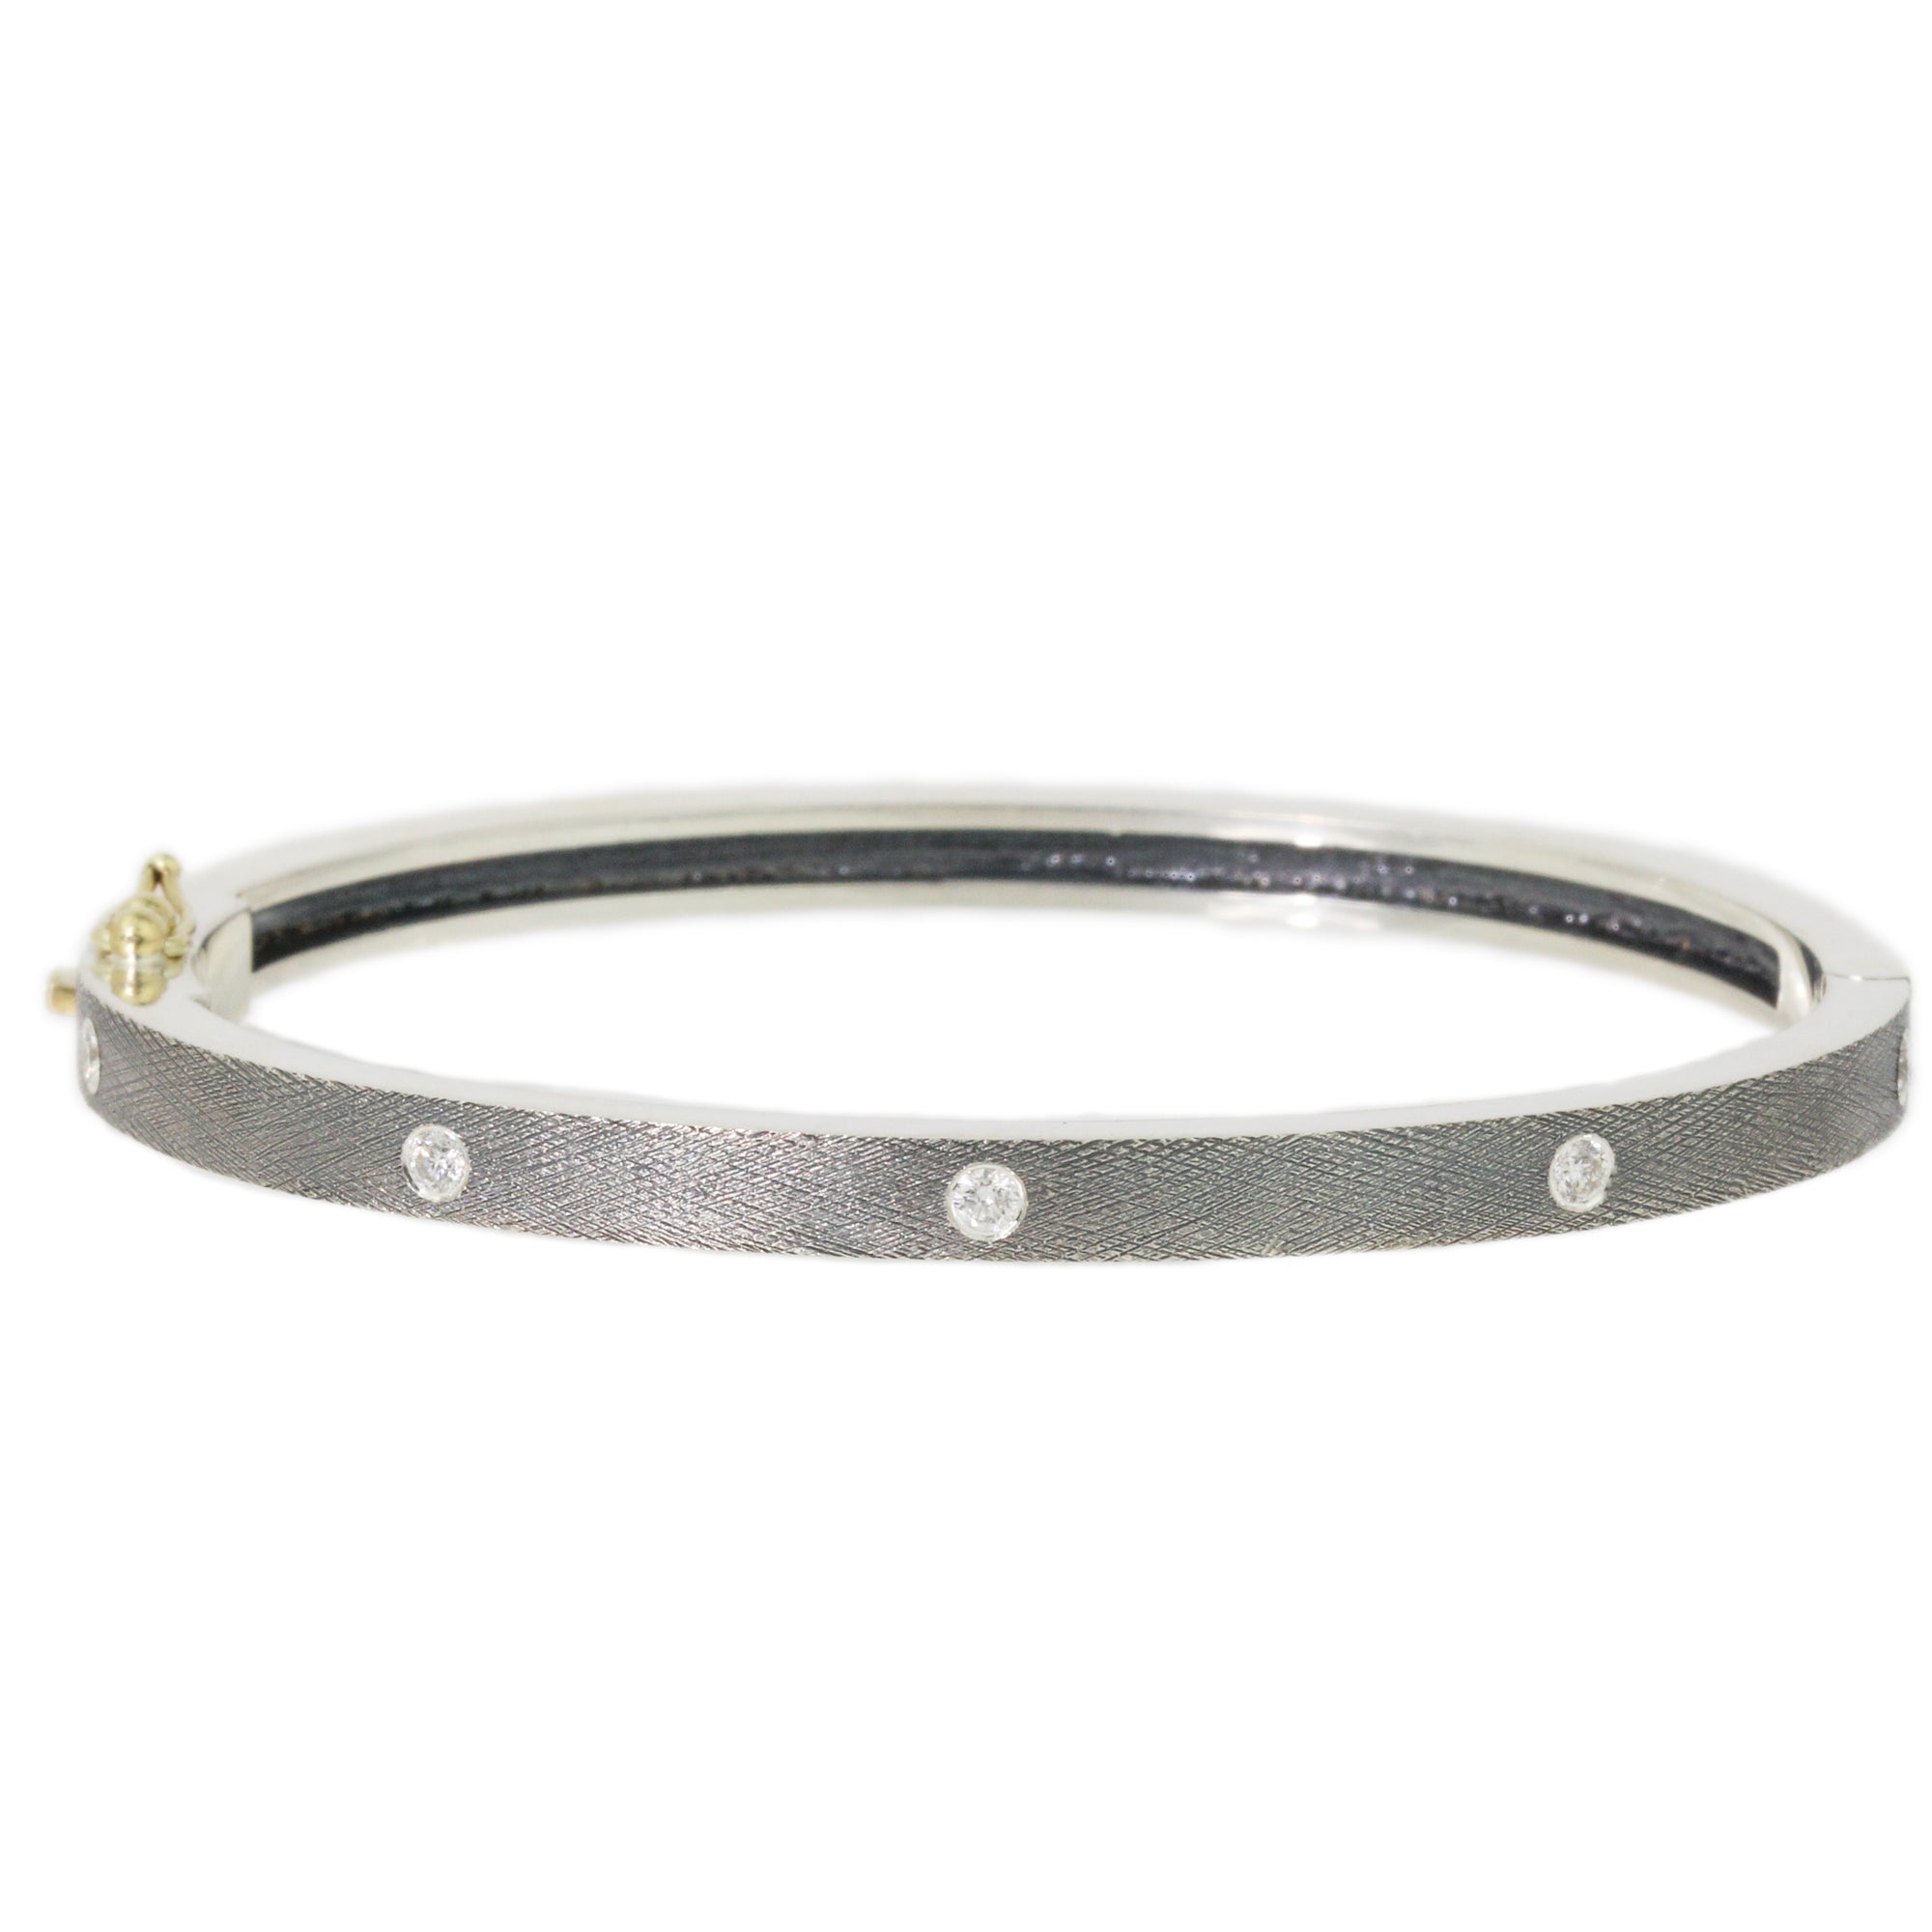 Olly 4mm Silver Bracelet